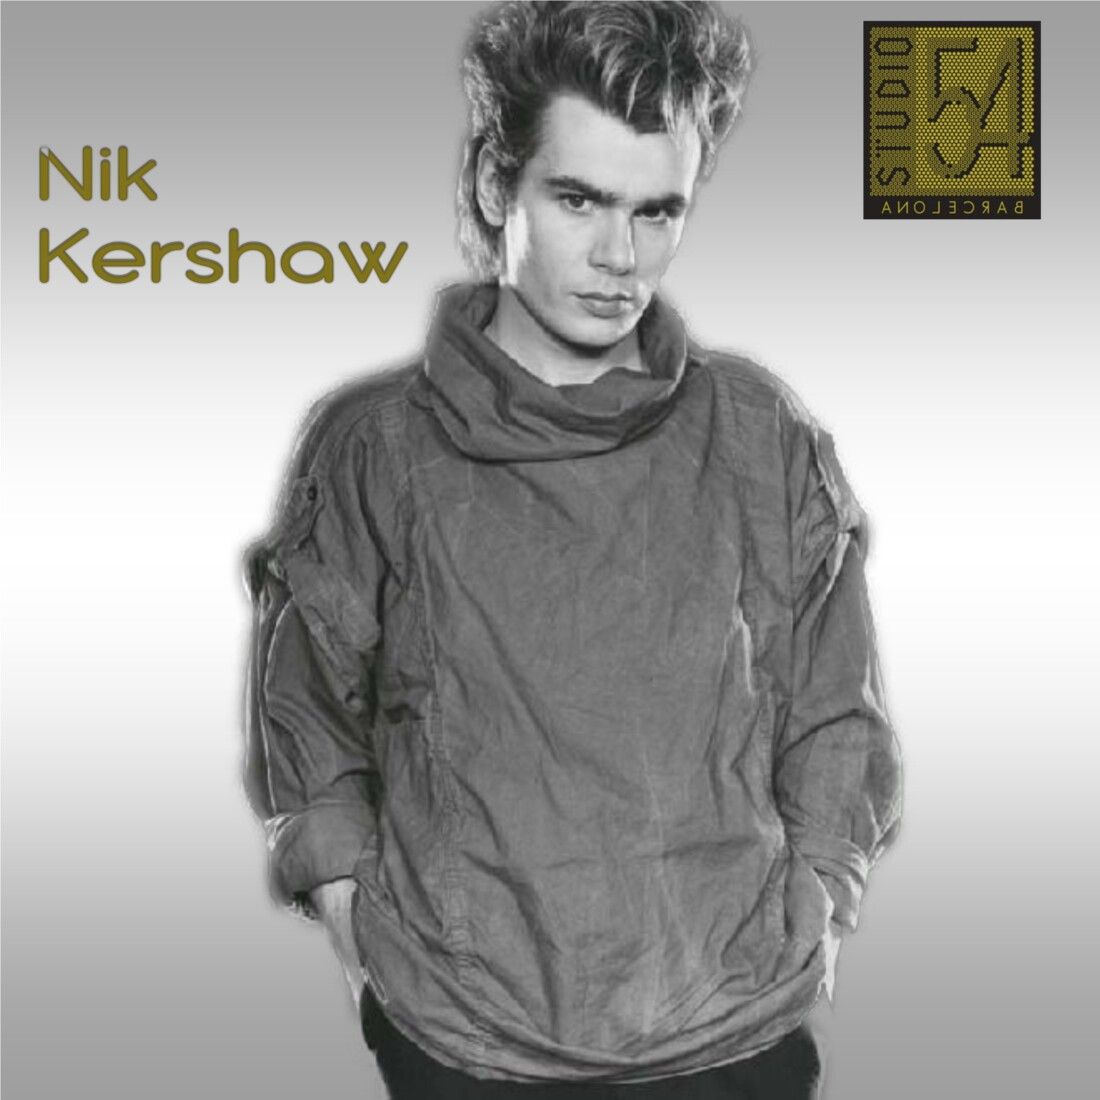 Nik Kershaw - Studio 54 - Topdisco Radio